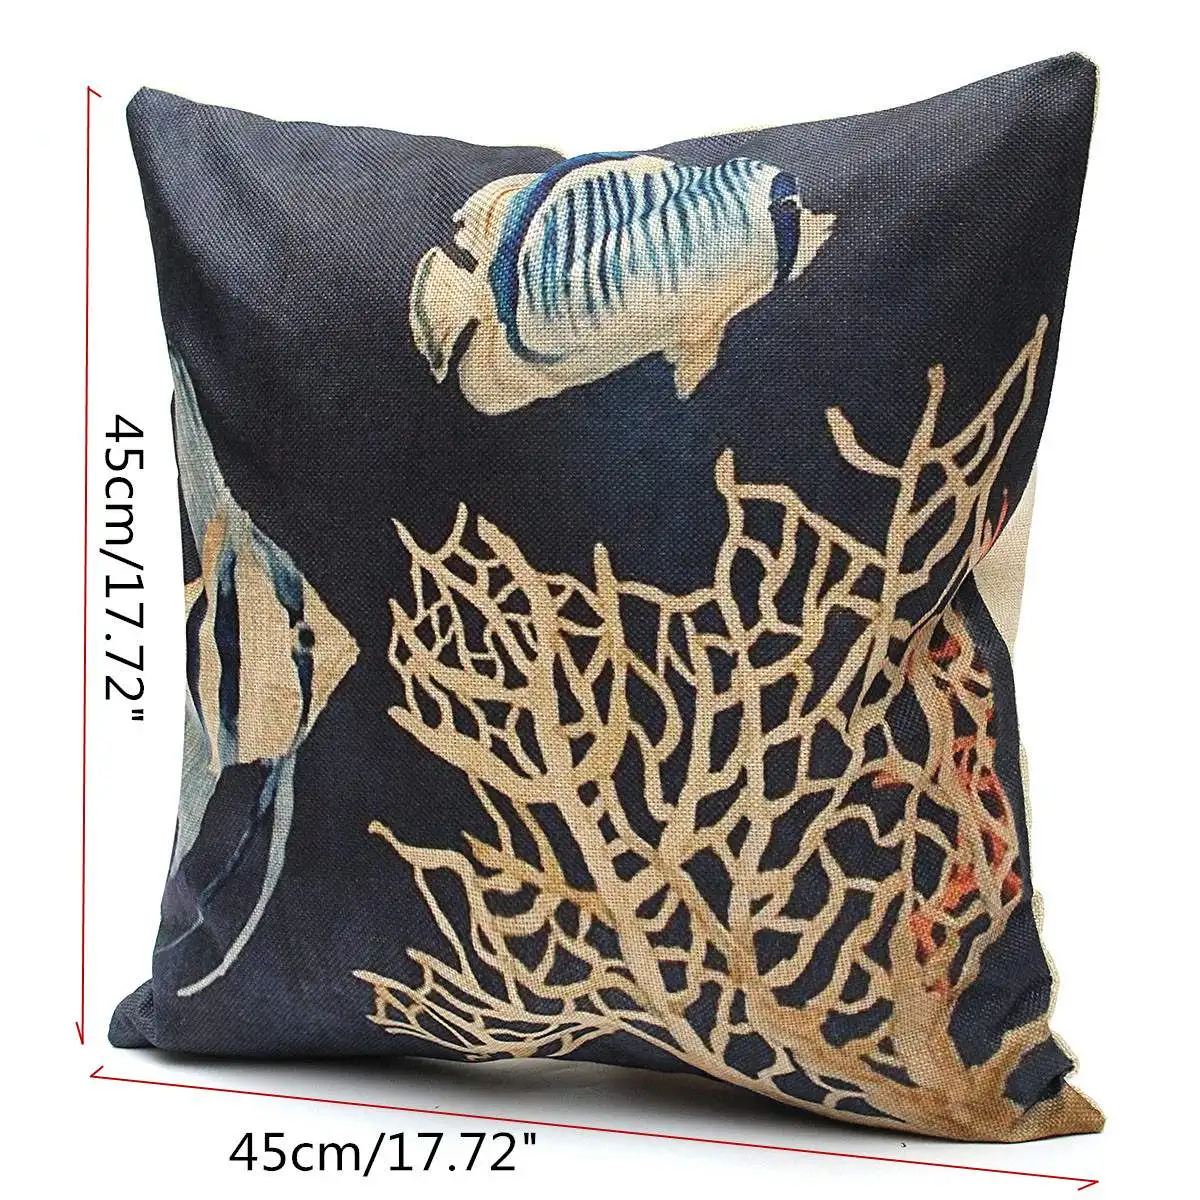 Sea Animal Printed Pillow Case Sofa Cushion Cover Throw Home Bedroom Car Decor 